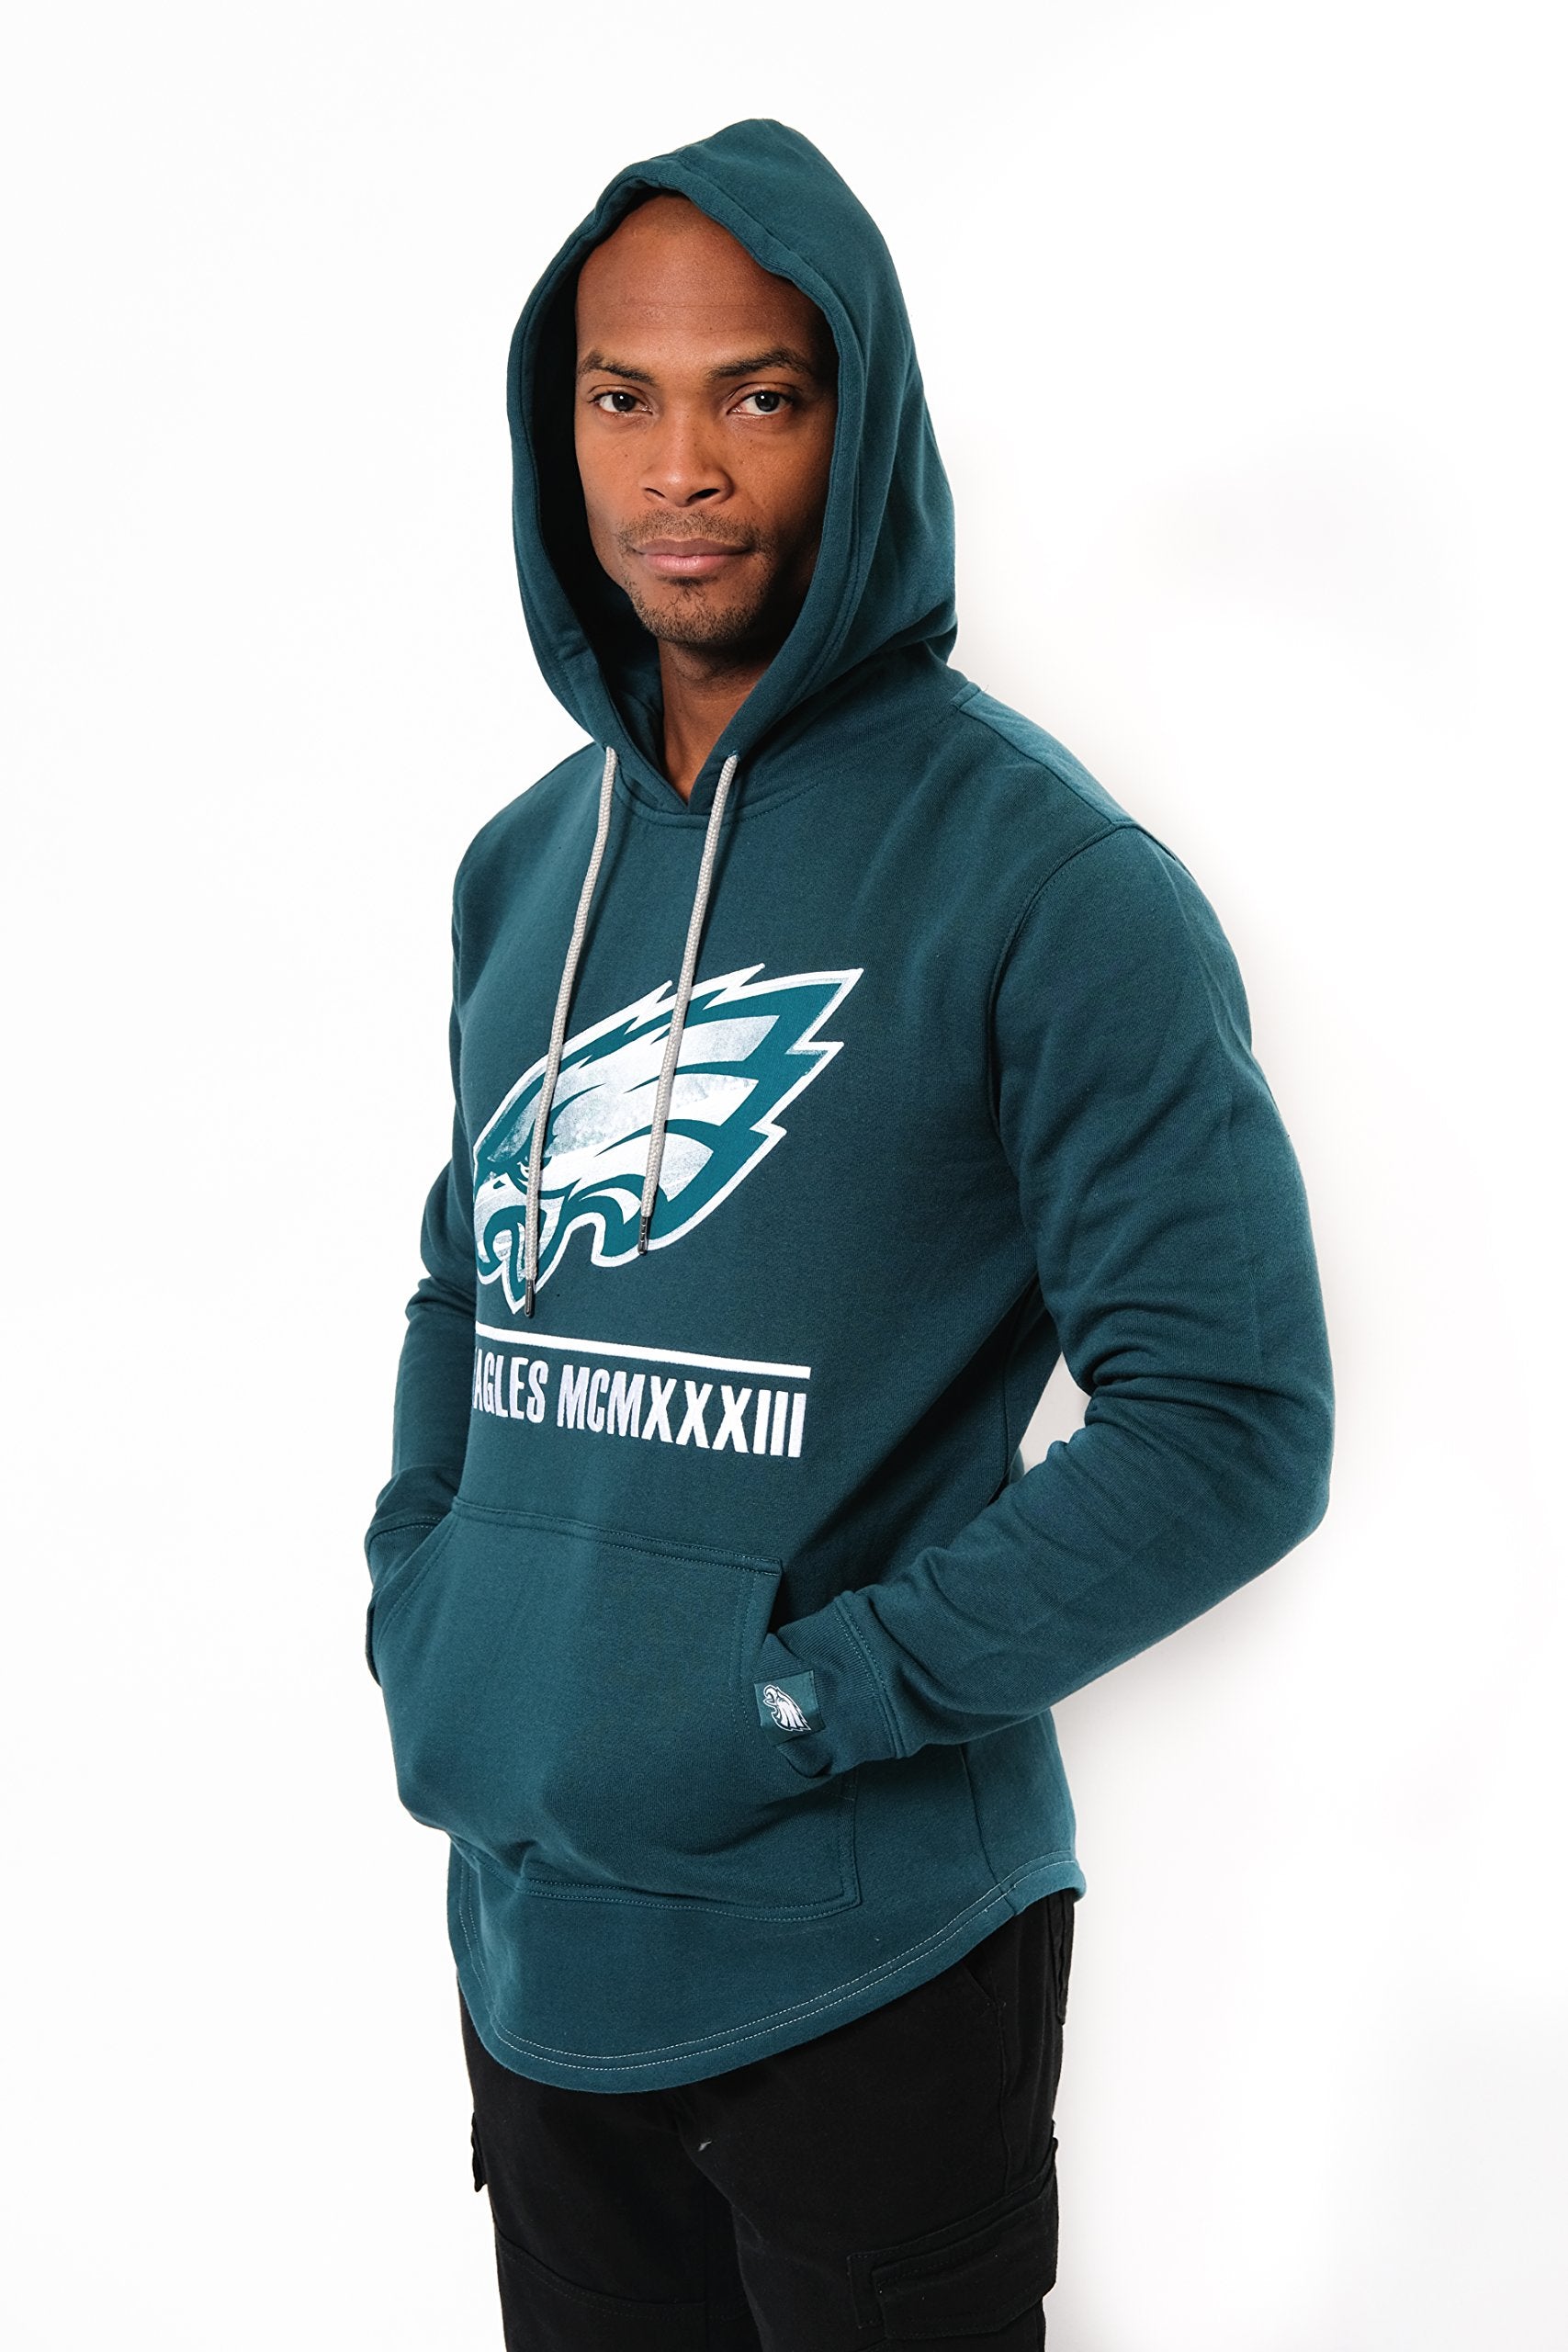 Ultra Game NFL Philadelphia Eagles Mens Embroidered Fleece Hoodie Pullover Sweatshirt|Philadelphia Eagles